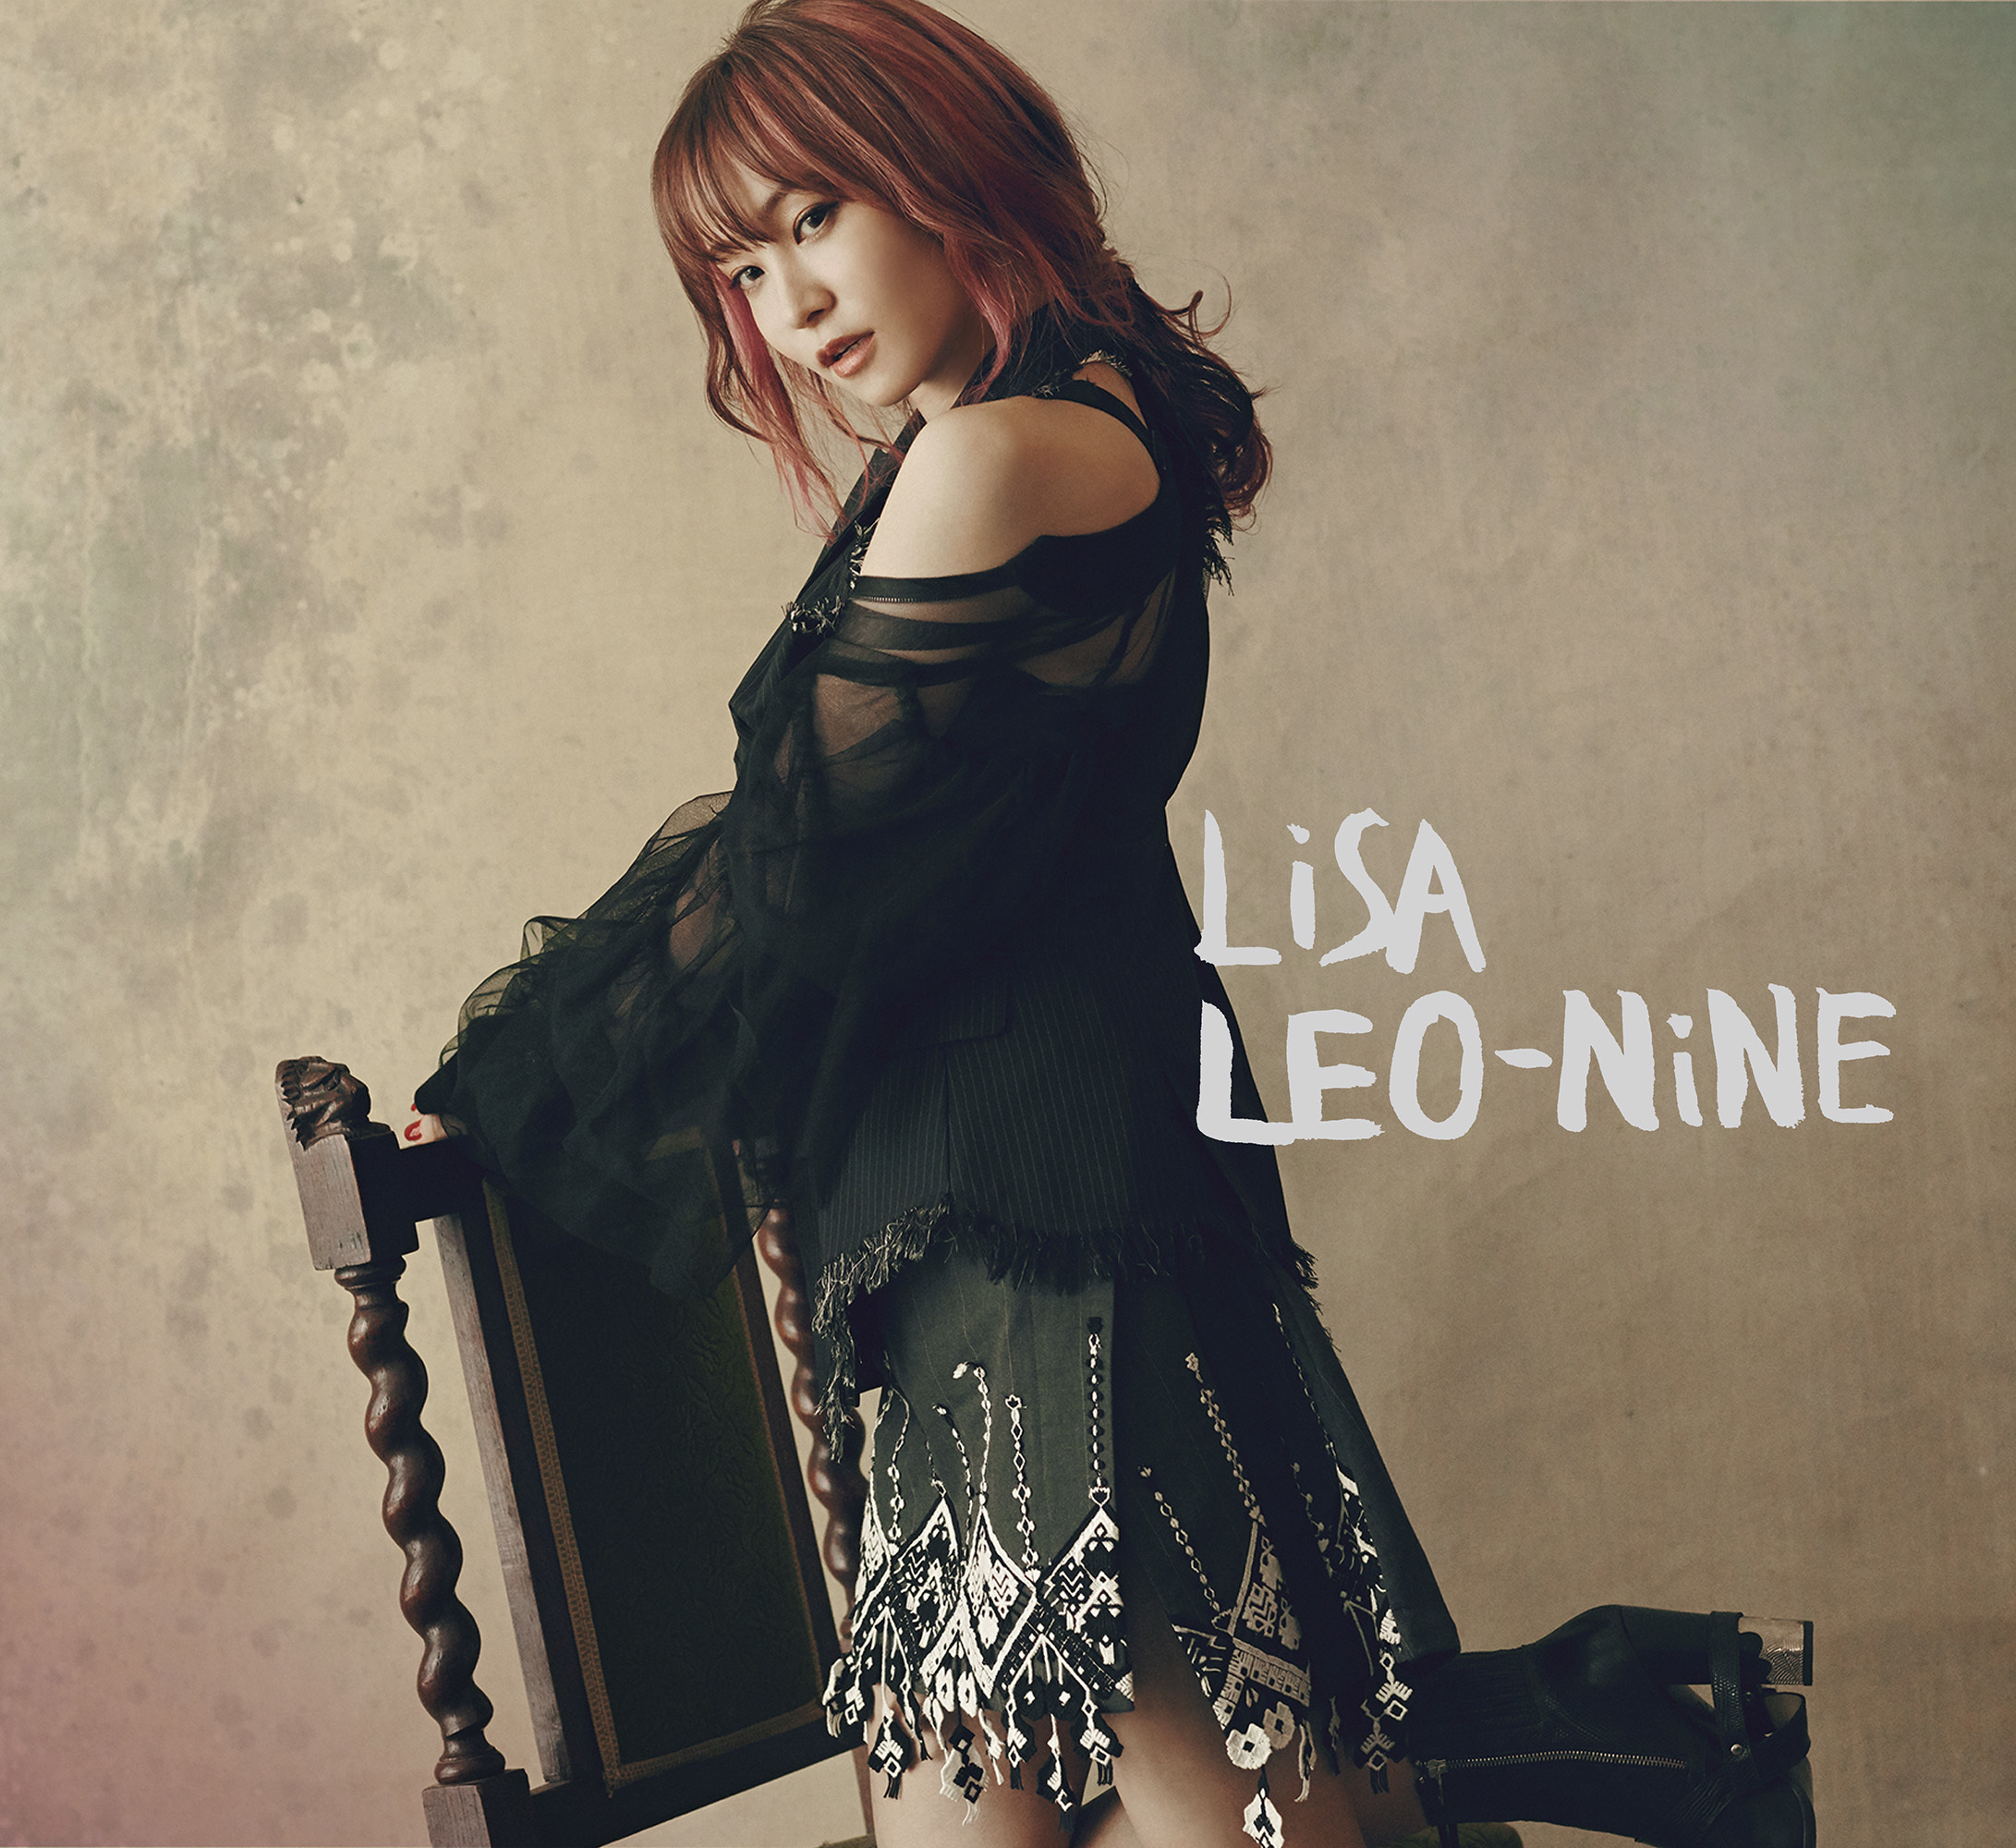 5thアルバム『LEO-NiNE』初回生産限定盤A